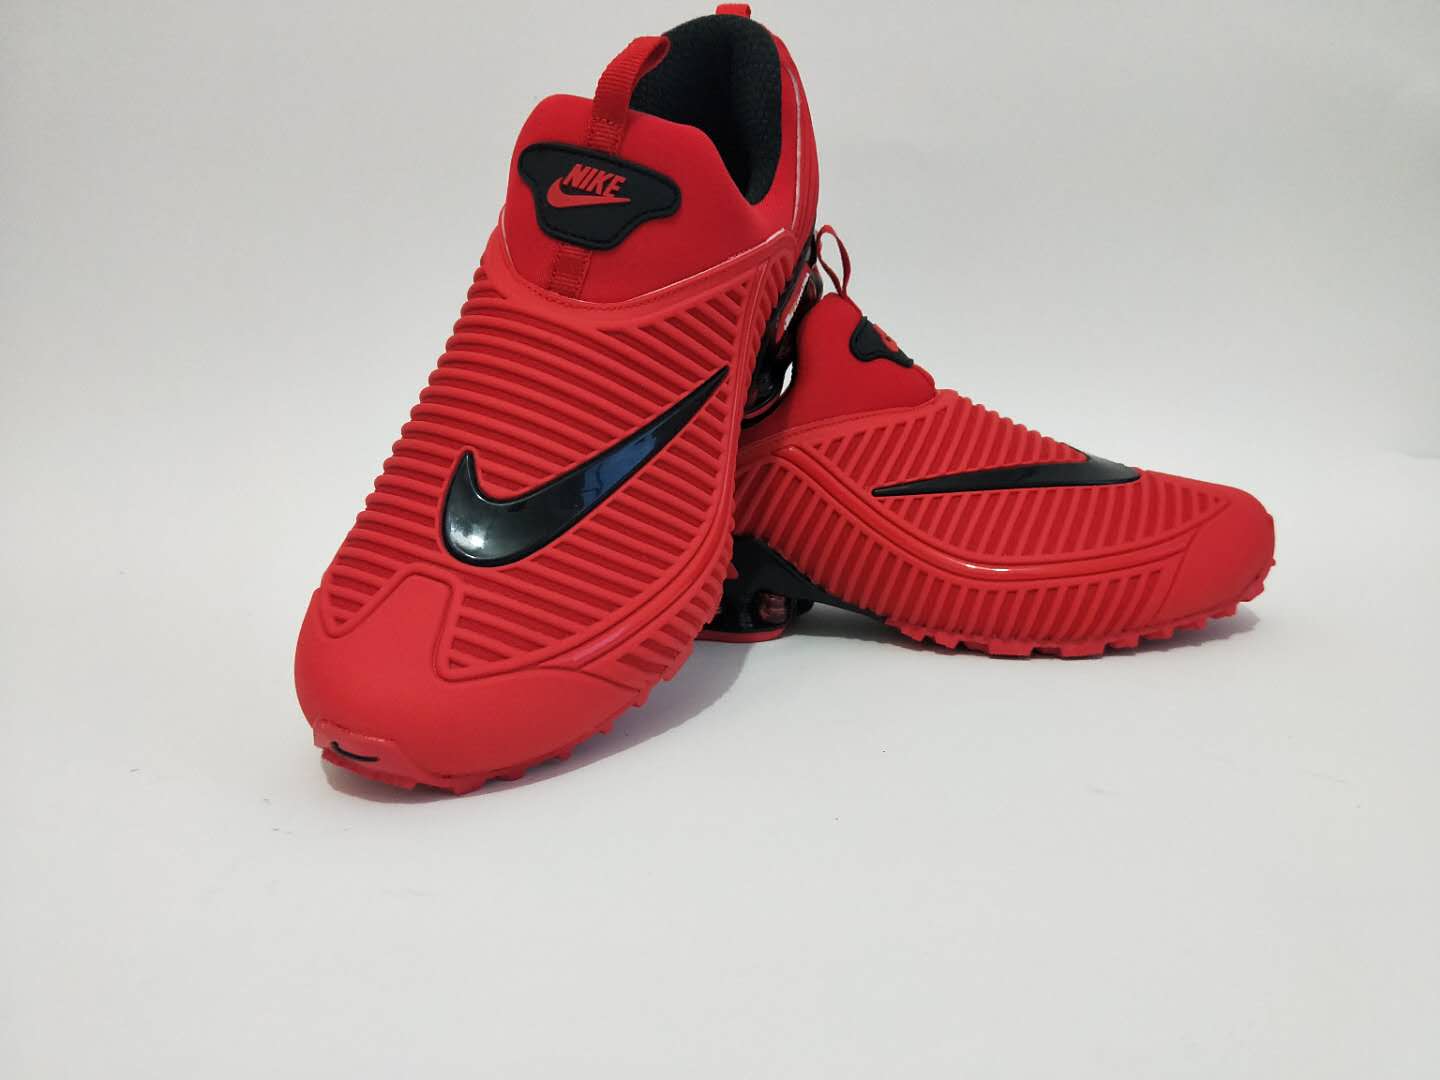 Nike Air Max 2019.5 Mesh Drop Plastic Red Black Shoes